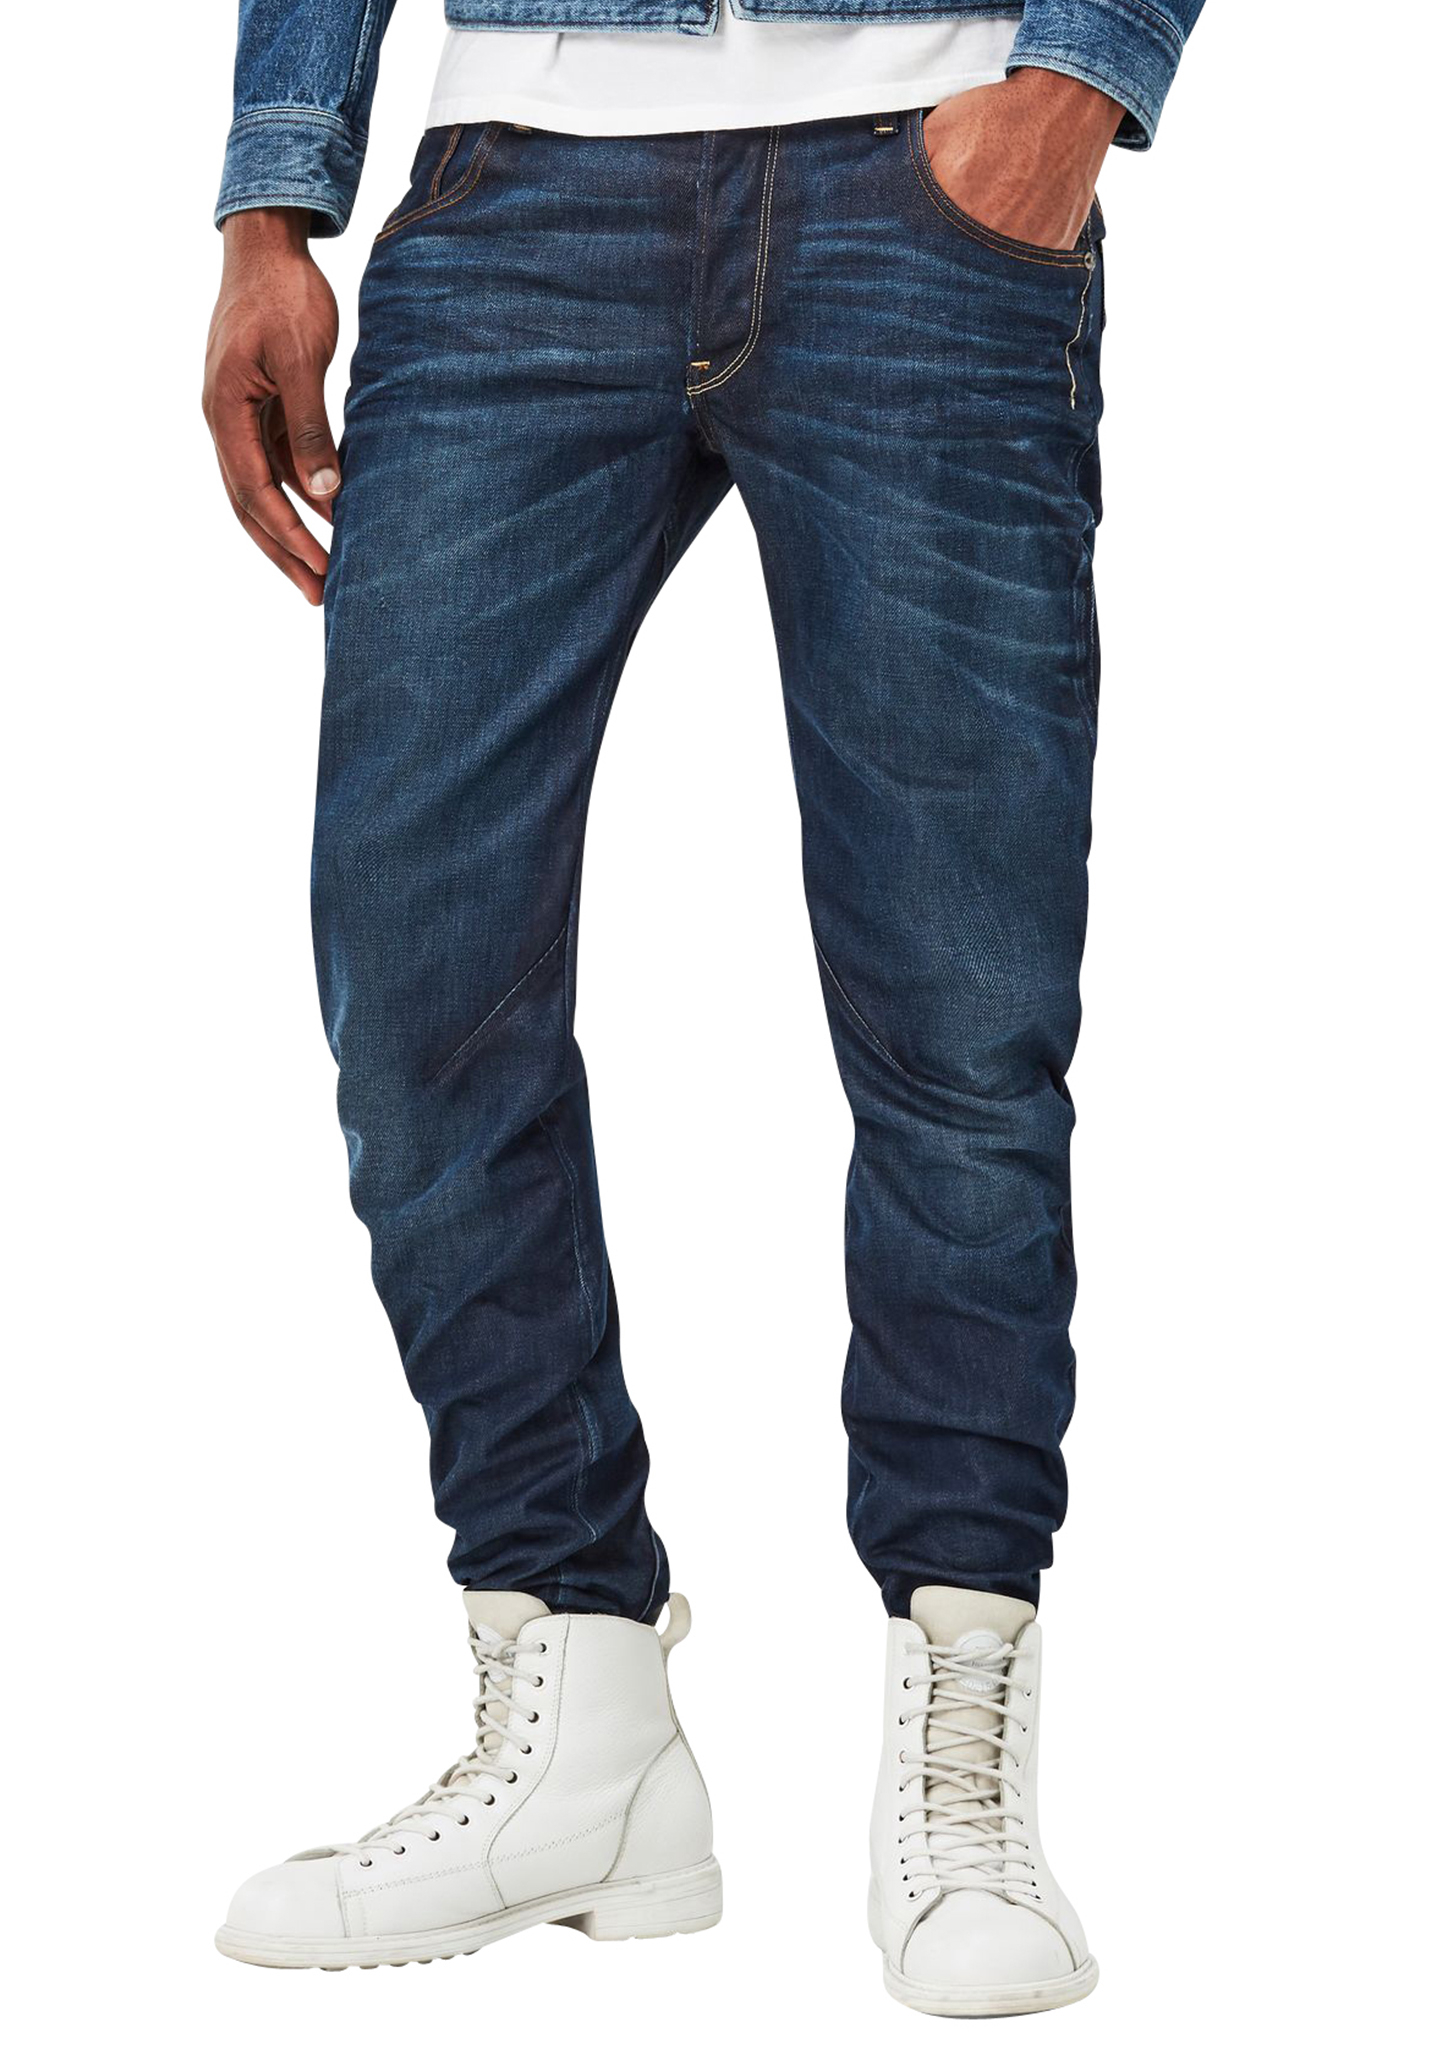 G-Star G-STAR Arc 3D Slim-Hydrite dk aged 34/30 Denim Jeans gealtert 40/36